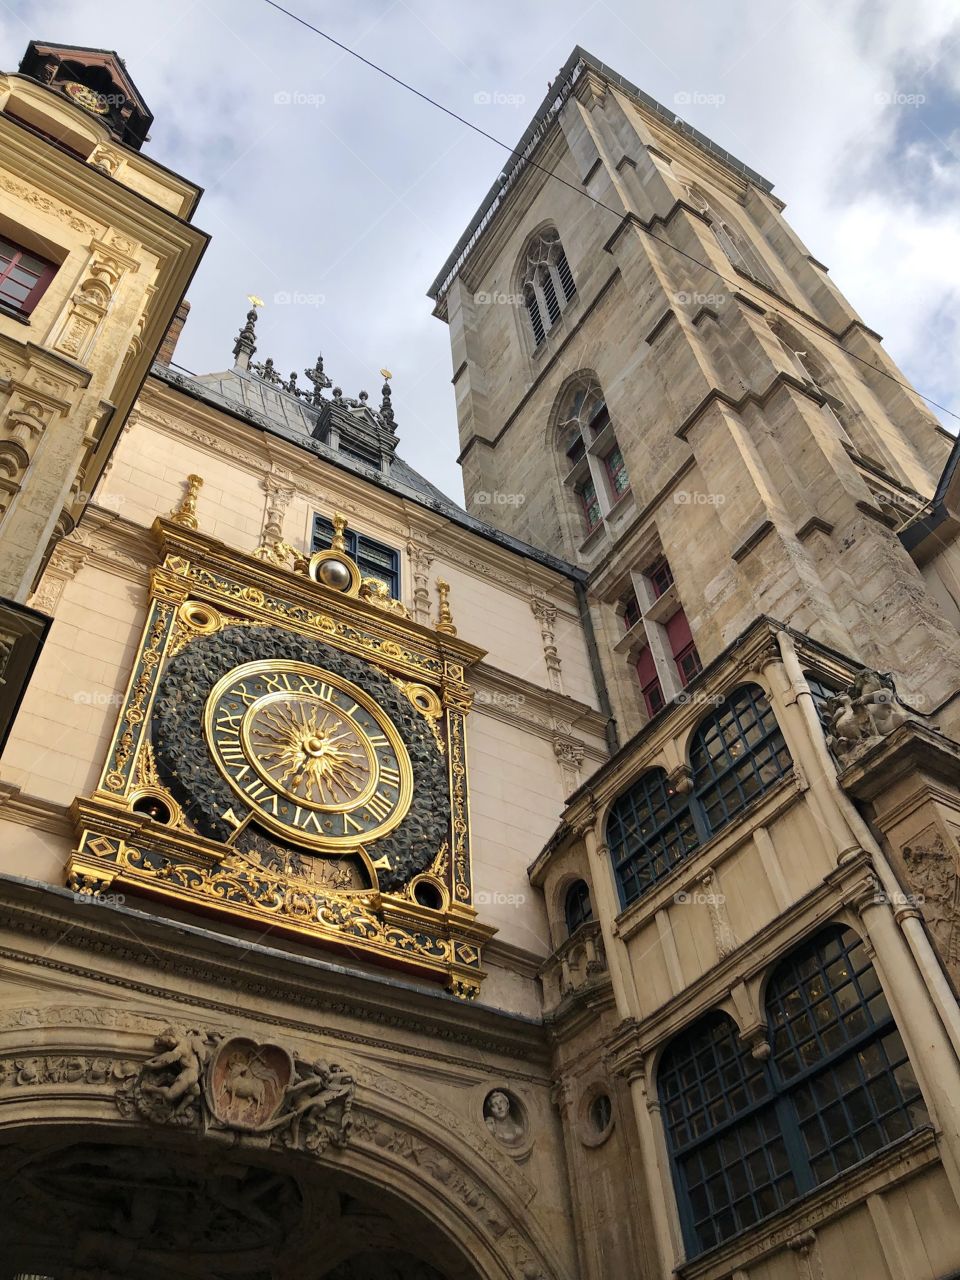 Rouen gros Horloge clock 